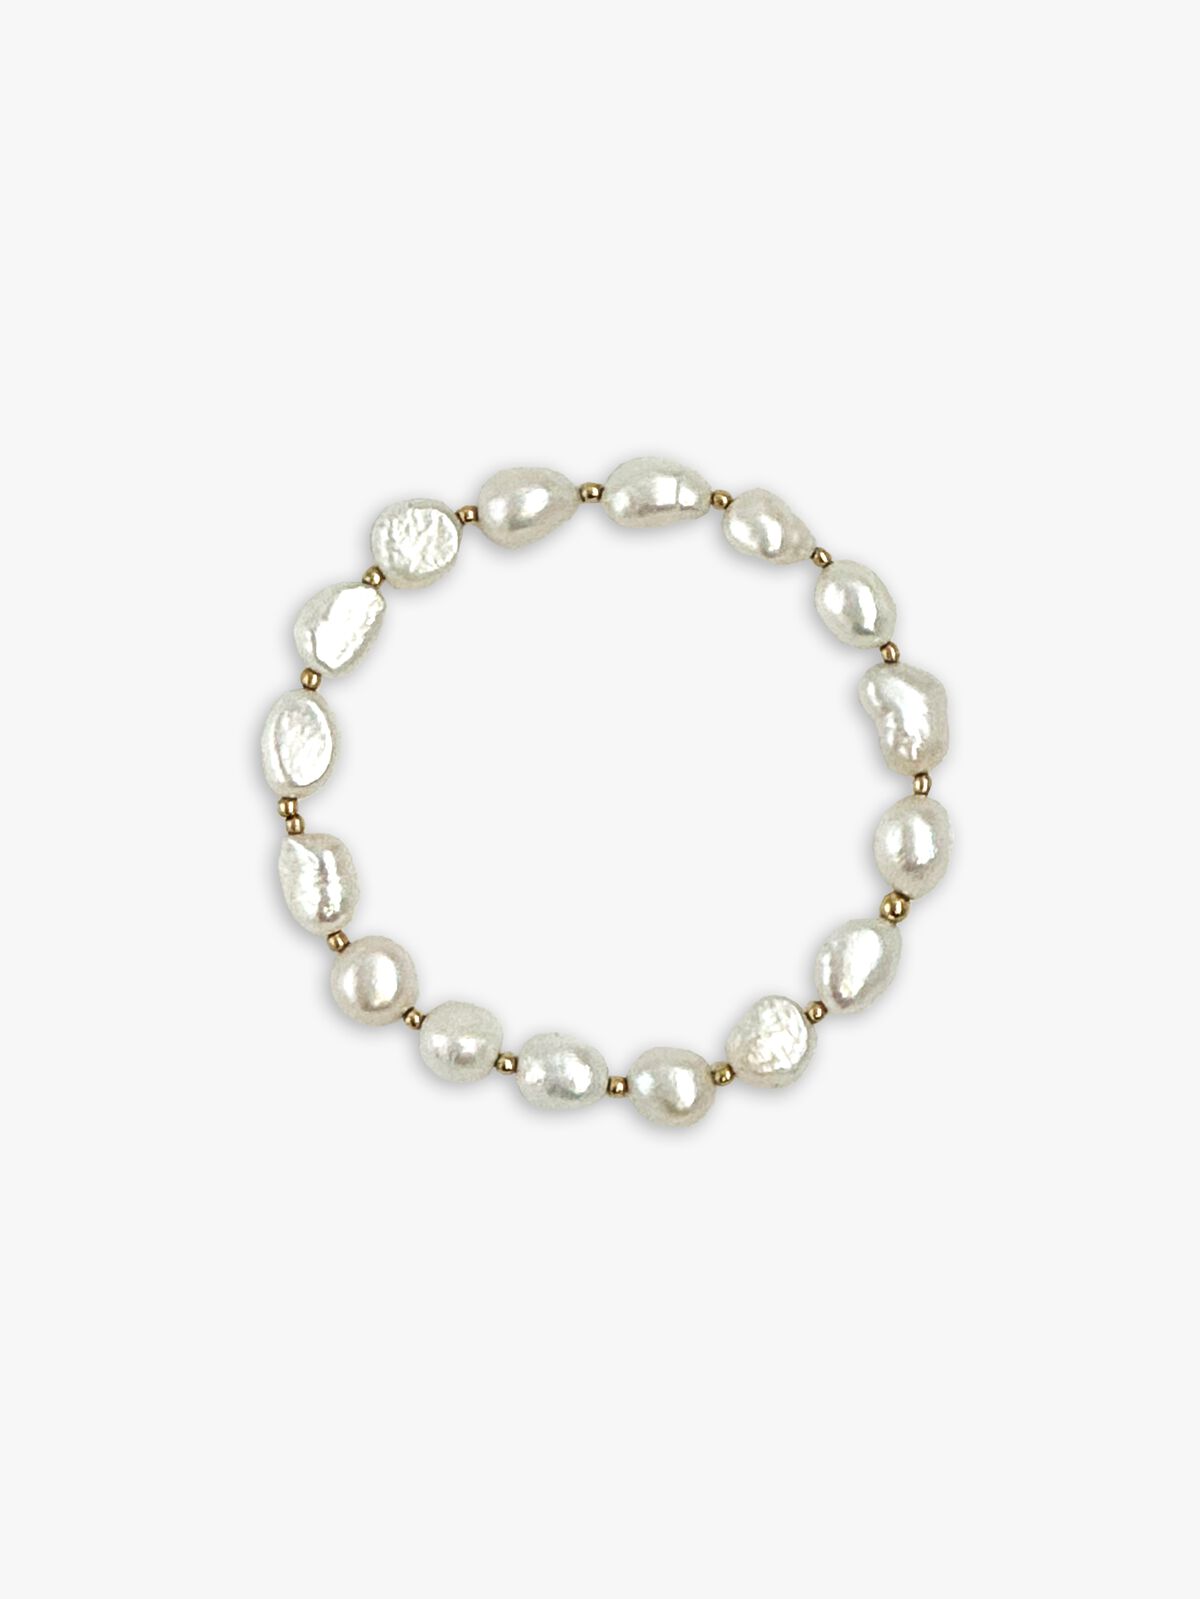 Paula Rosen 8 oz Peral Bracelet - Pearl & Gold Bead